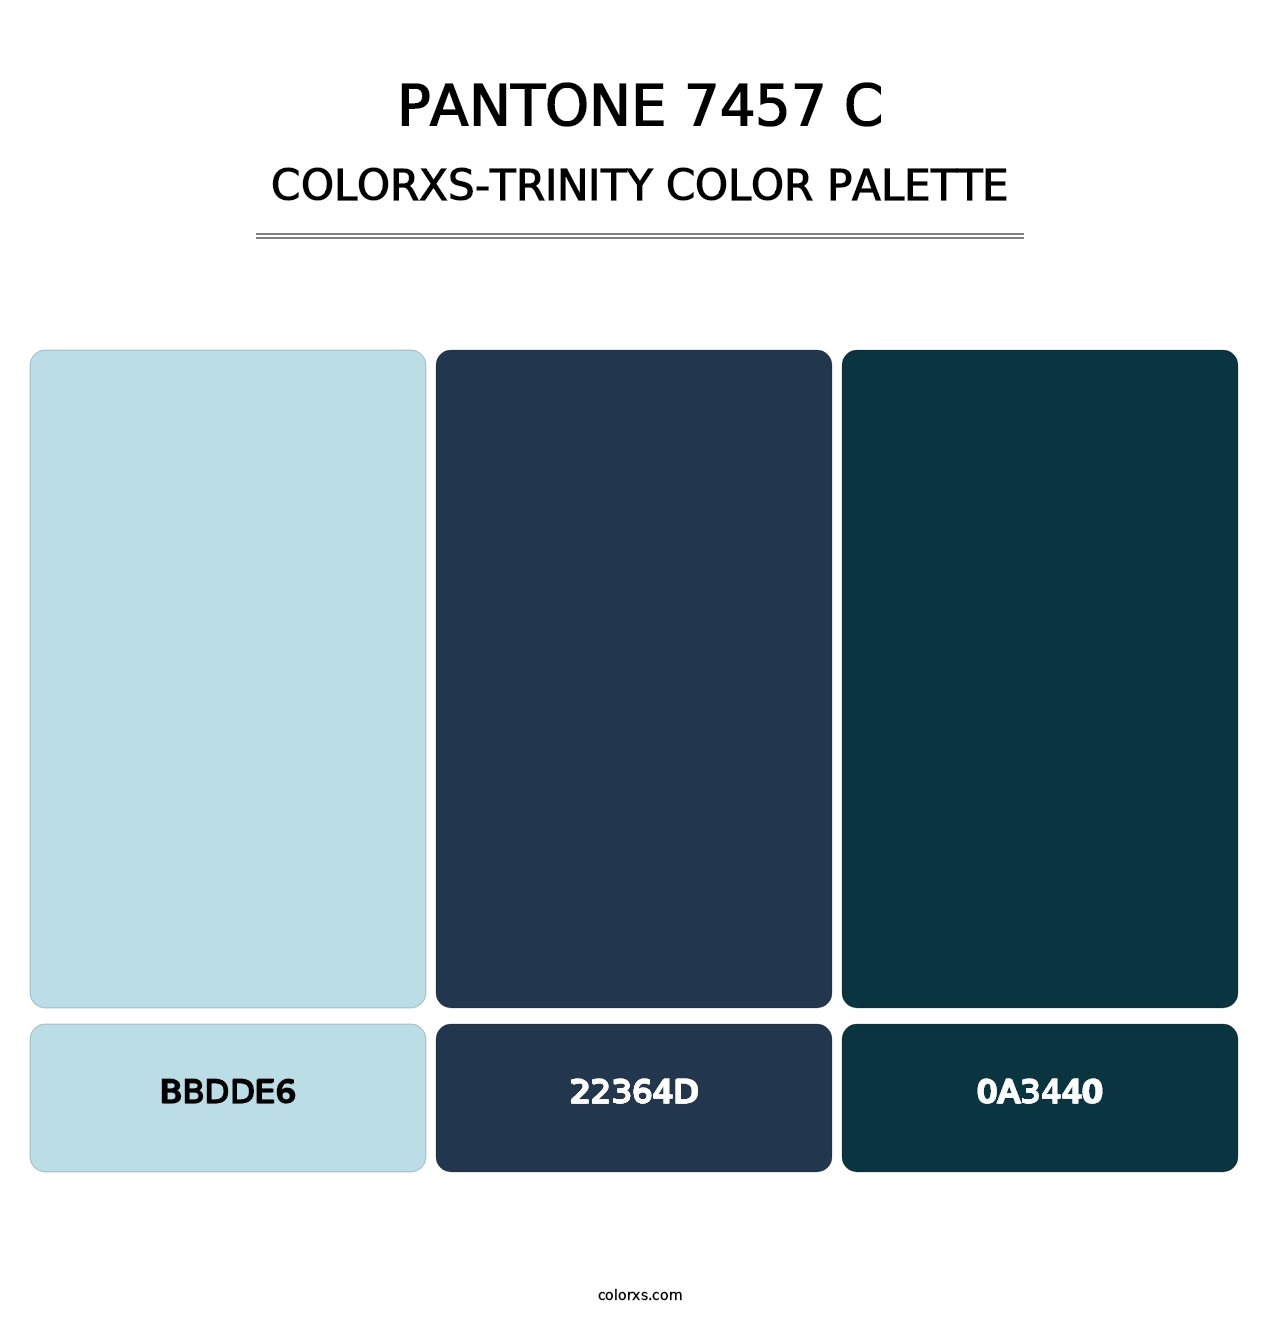 PANTONE 7457 C - Colorxs Trinity Palette